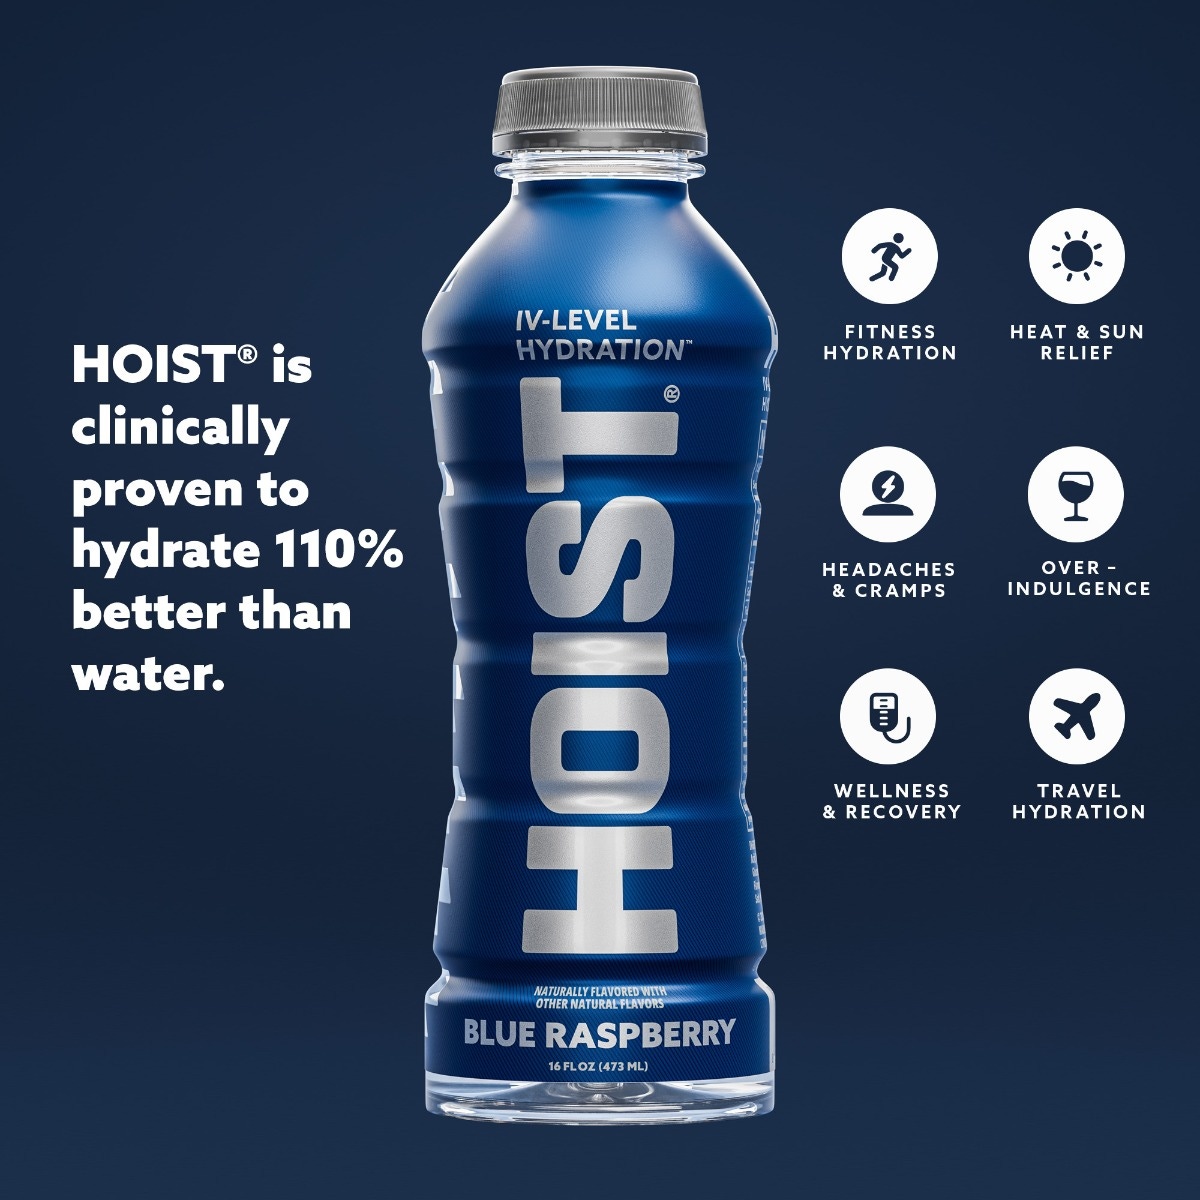 Hoist Ready-to-Drink IV-Level Hydration Bottles - group